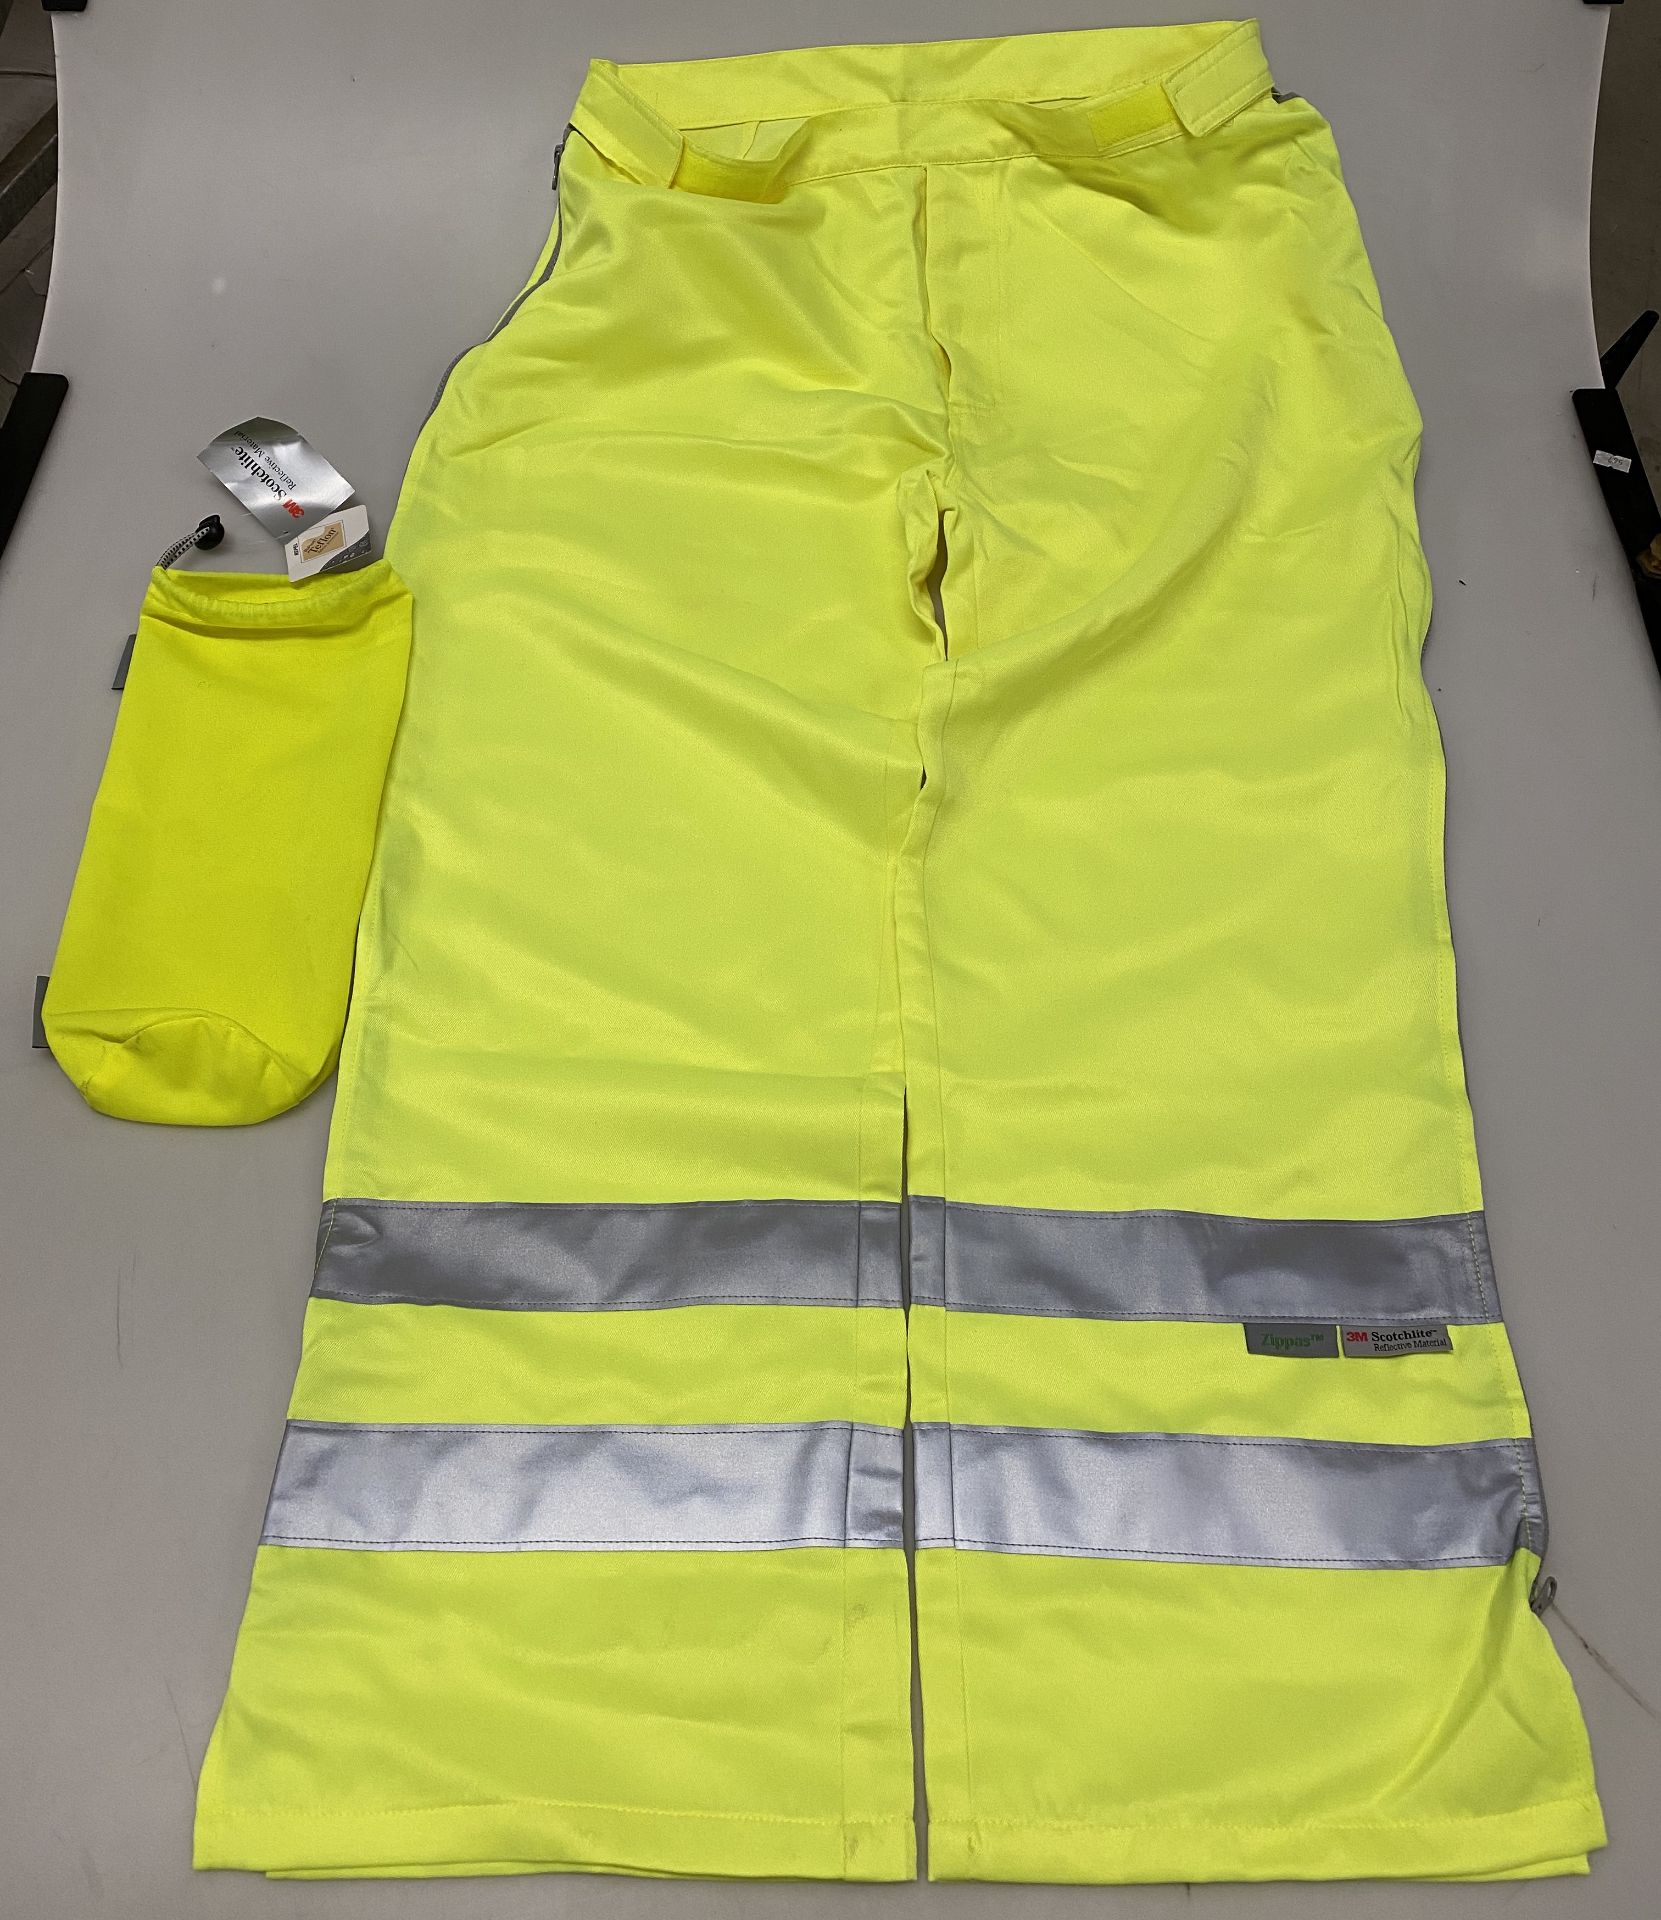 12 x Hi-Vi Zippas MX yellow PPE high visibility Teflon/Scotchlite zipped over trousers and bags.